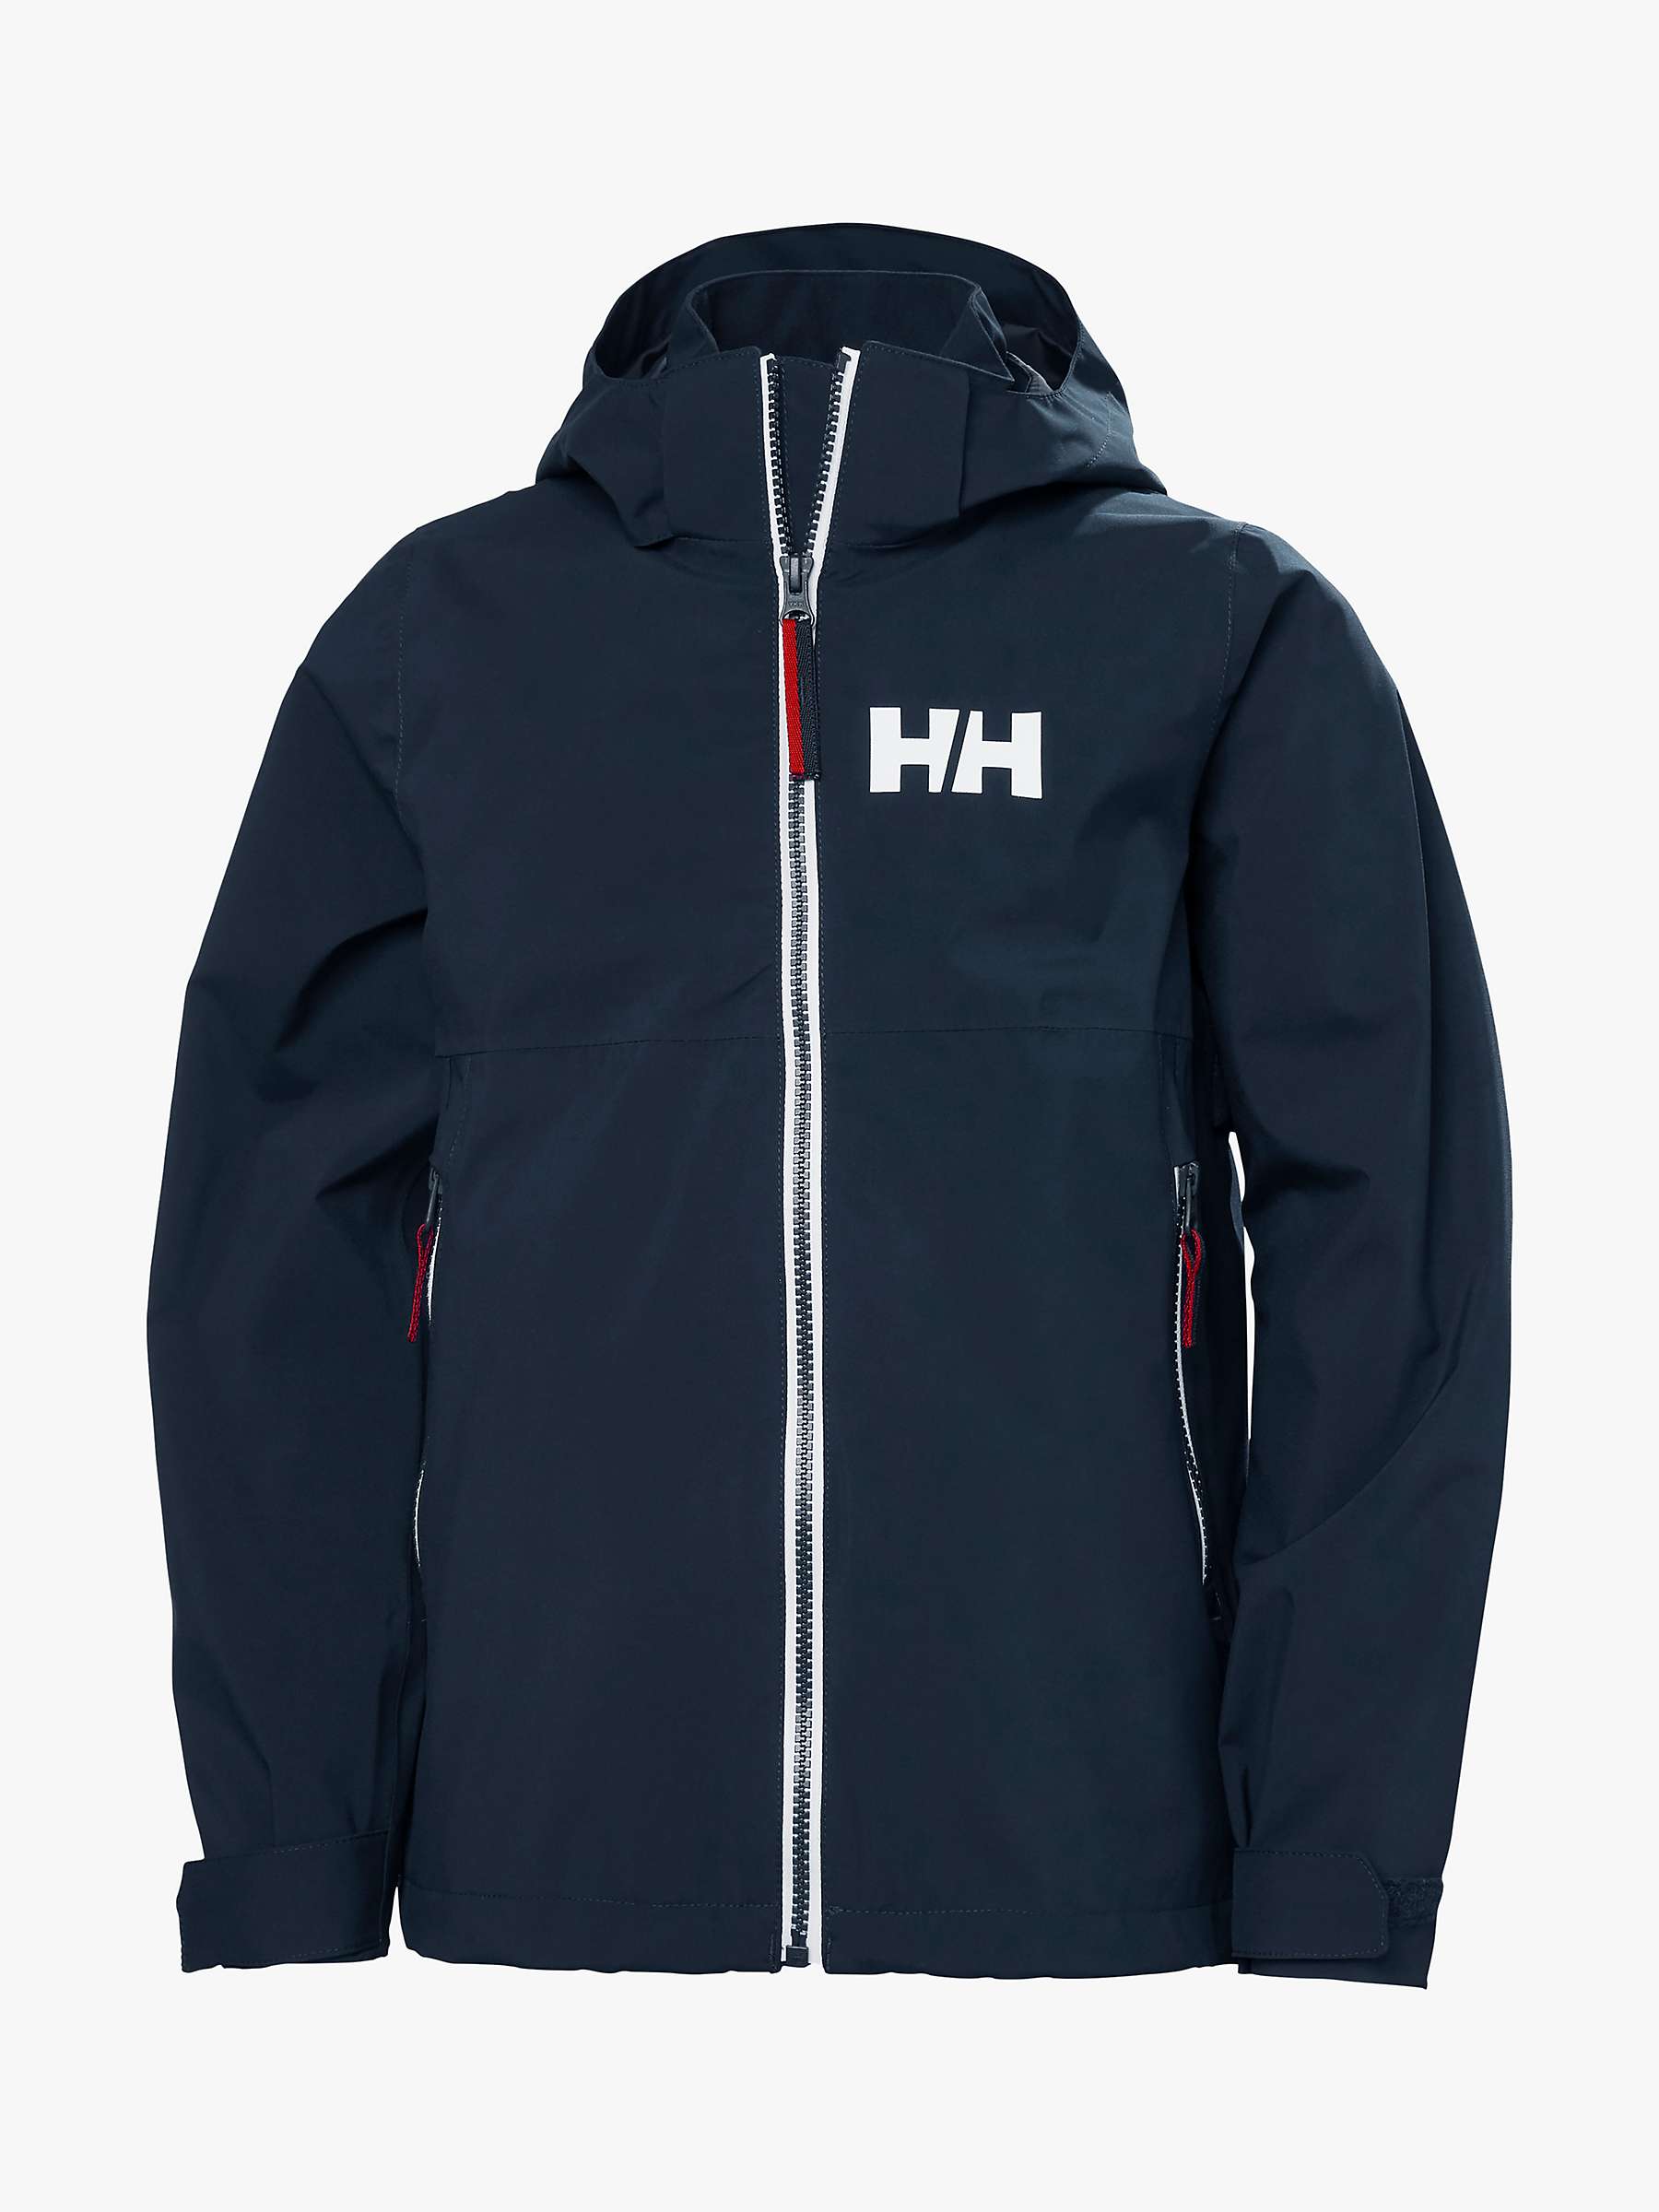 Buy Helly Hansen Kids' Rigging Rain Jacket, Navy Online at johnlewis.com